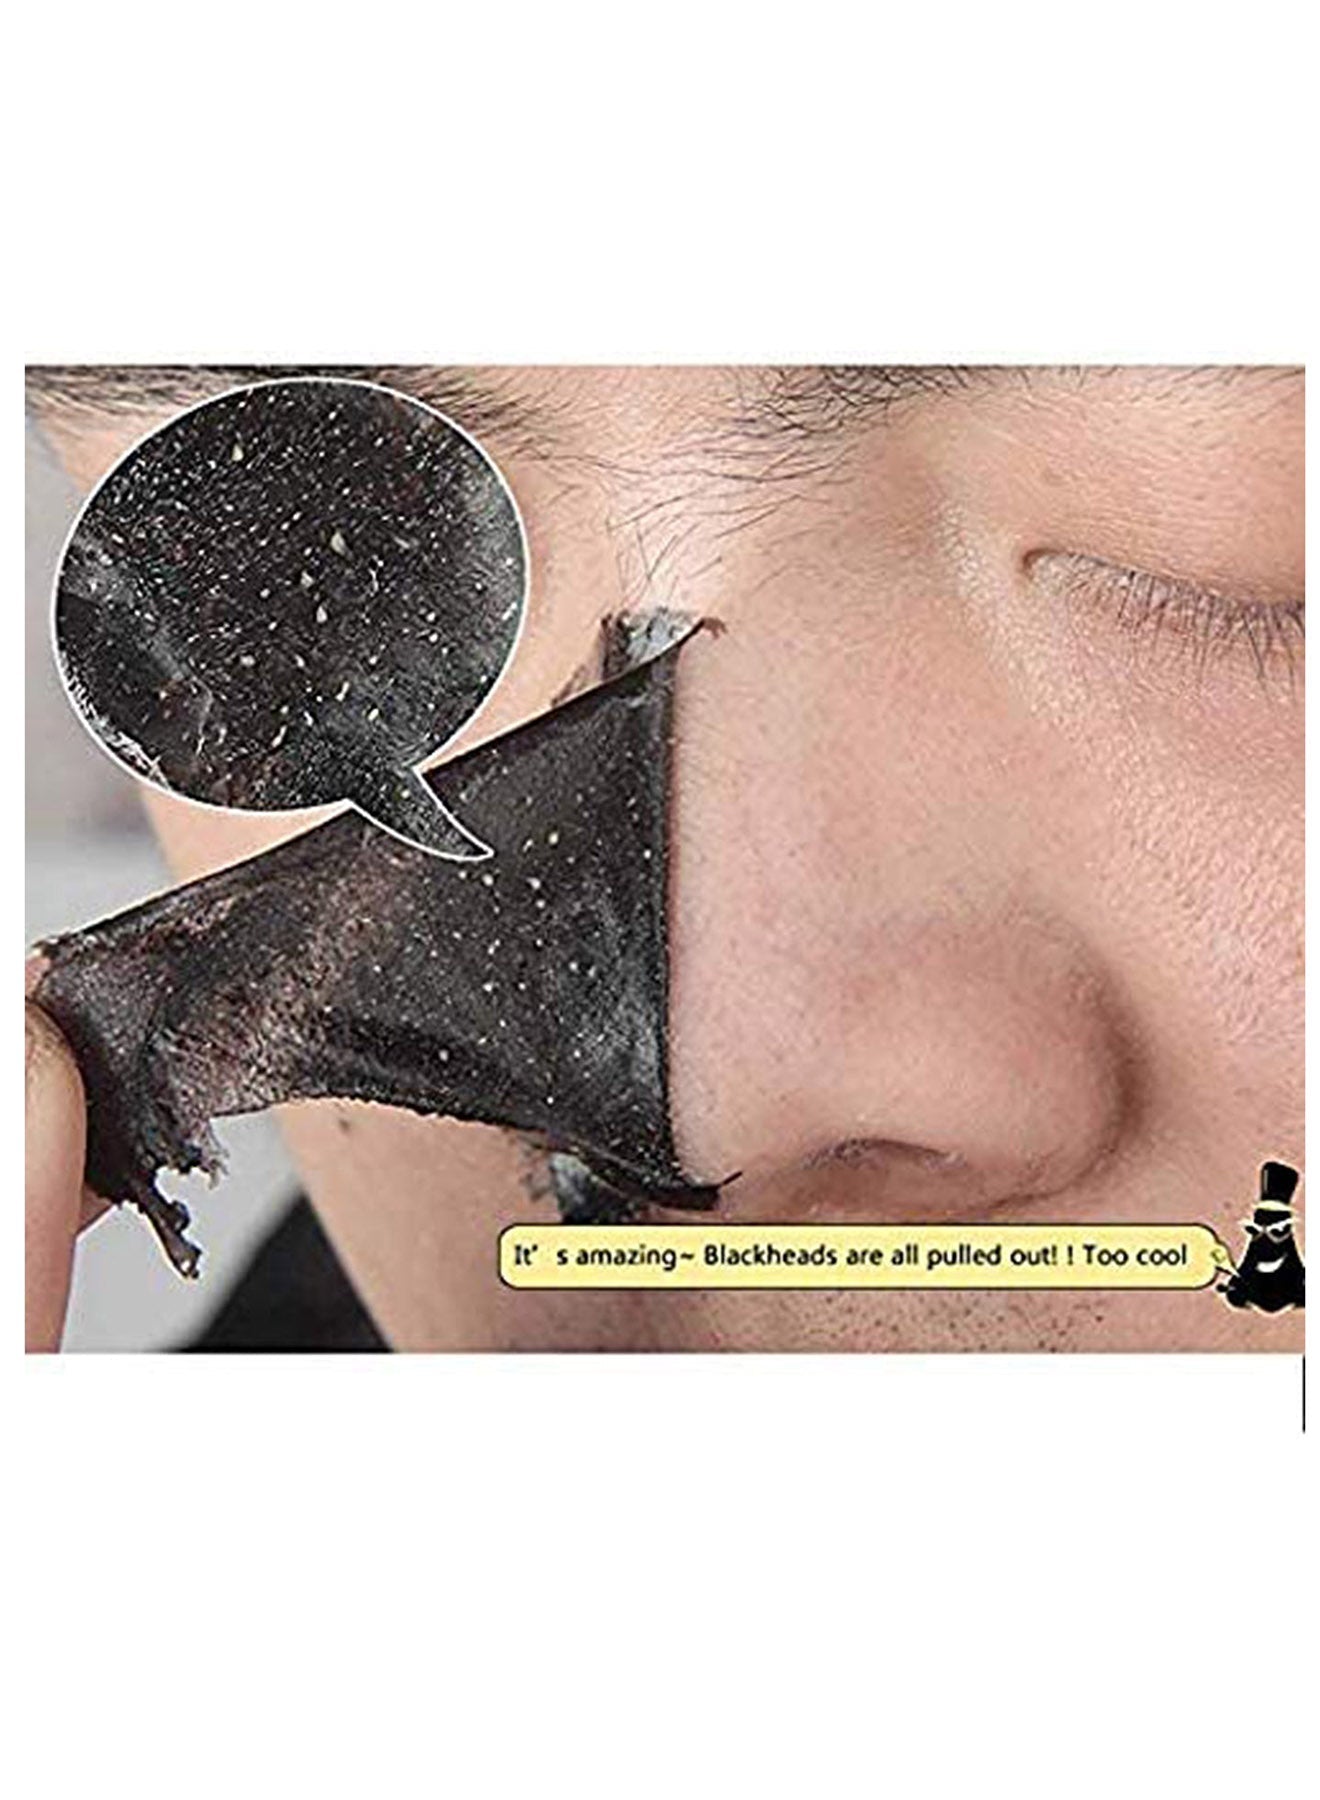 Dr Rashel Black Charcoal Nose Strips Blackhead Remover 6 Strips